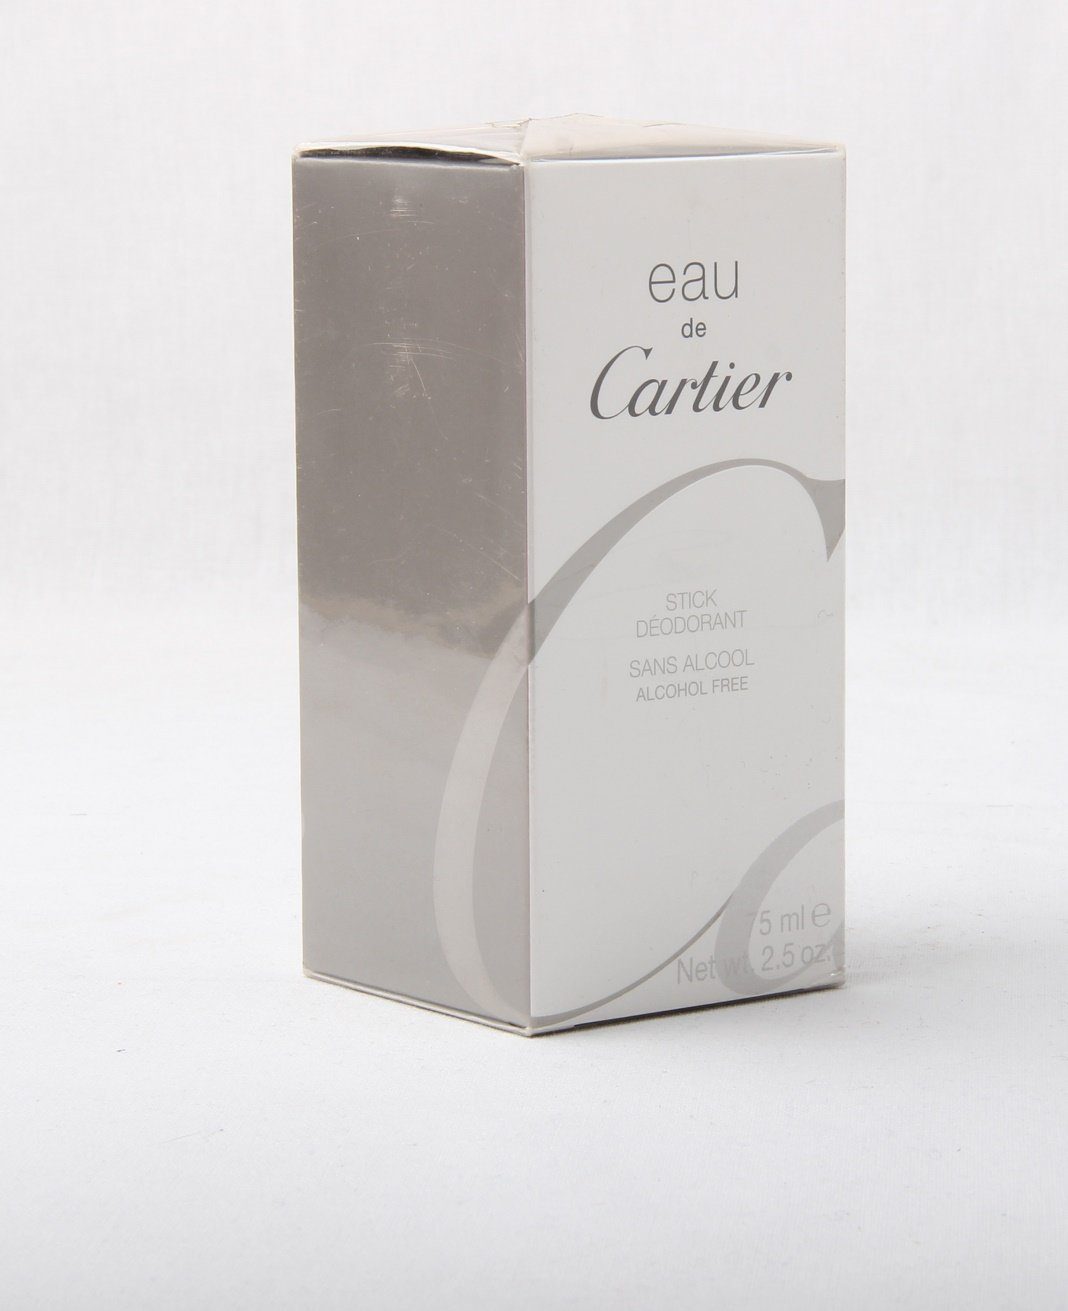 Eau Körperspray Deodorant Cartier 75ml Stick de Cartier